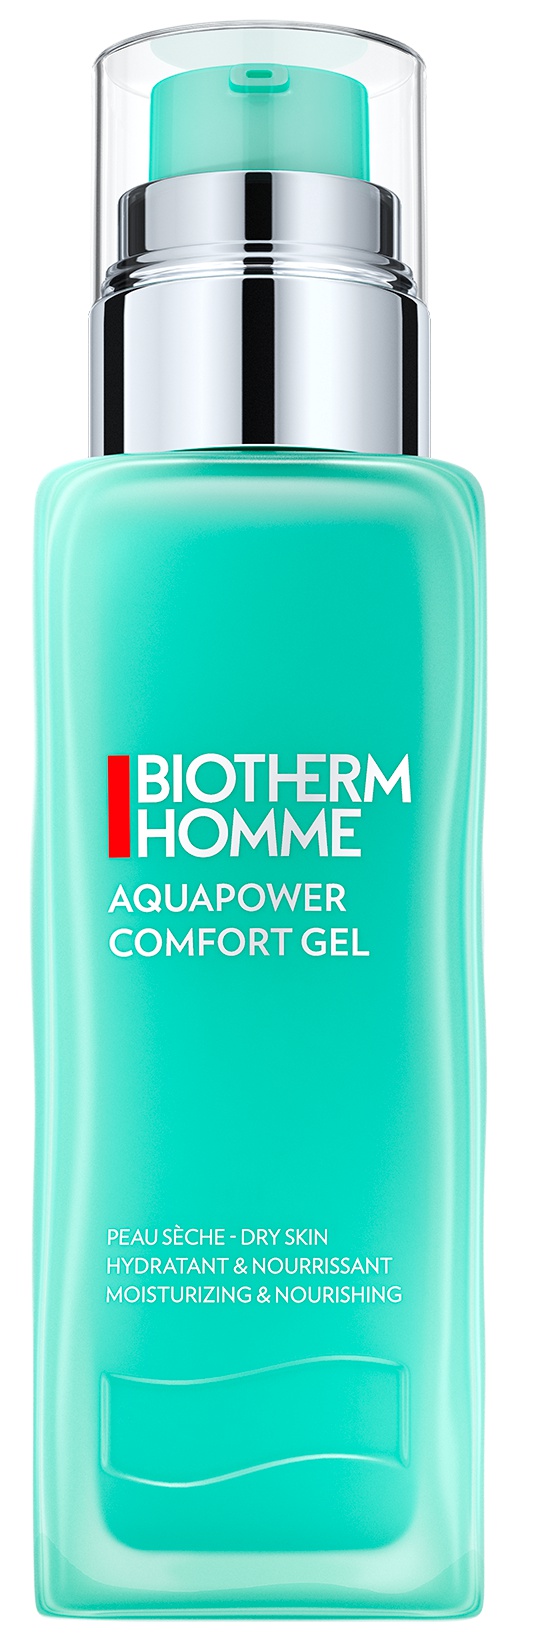 Biotherm Homme Aquapower Comfort Gel Moisturizer (dry Skin)